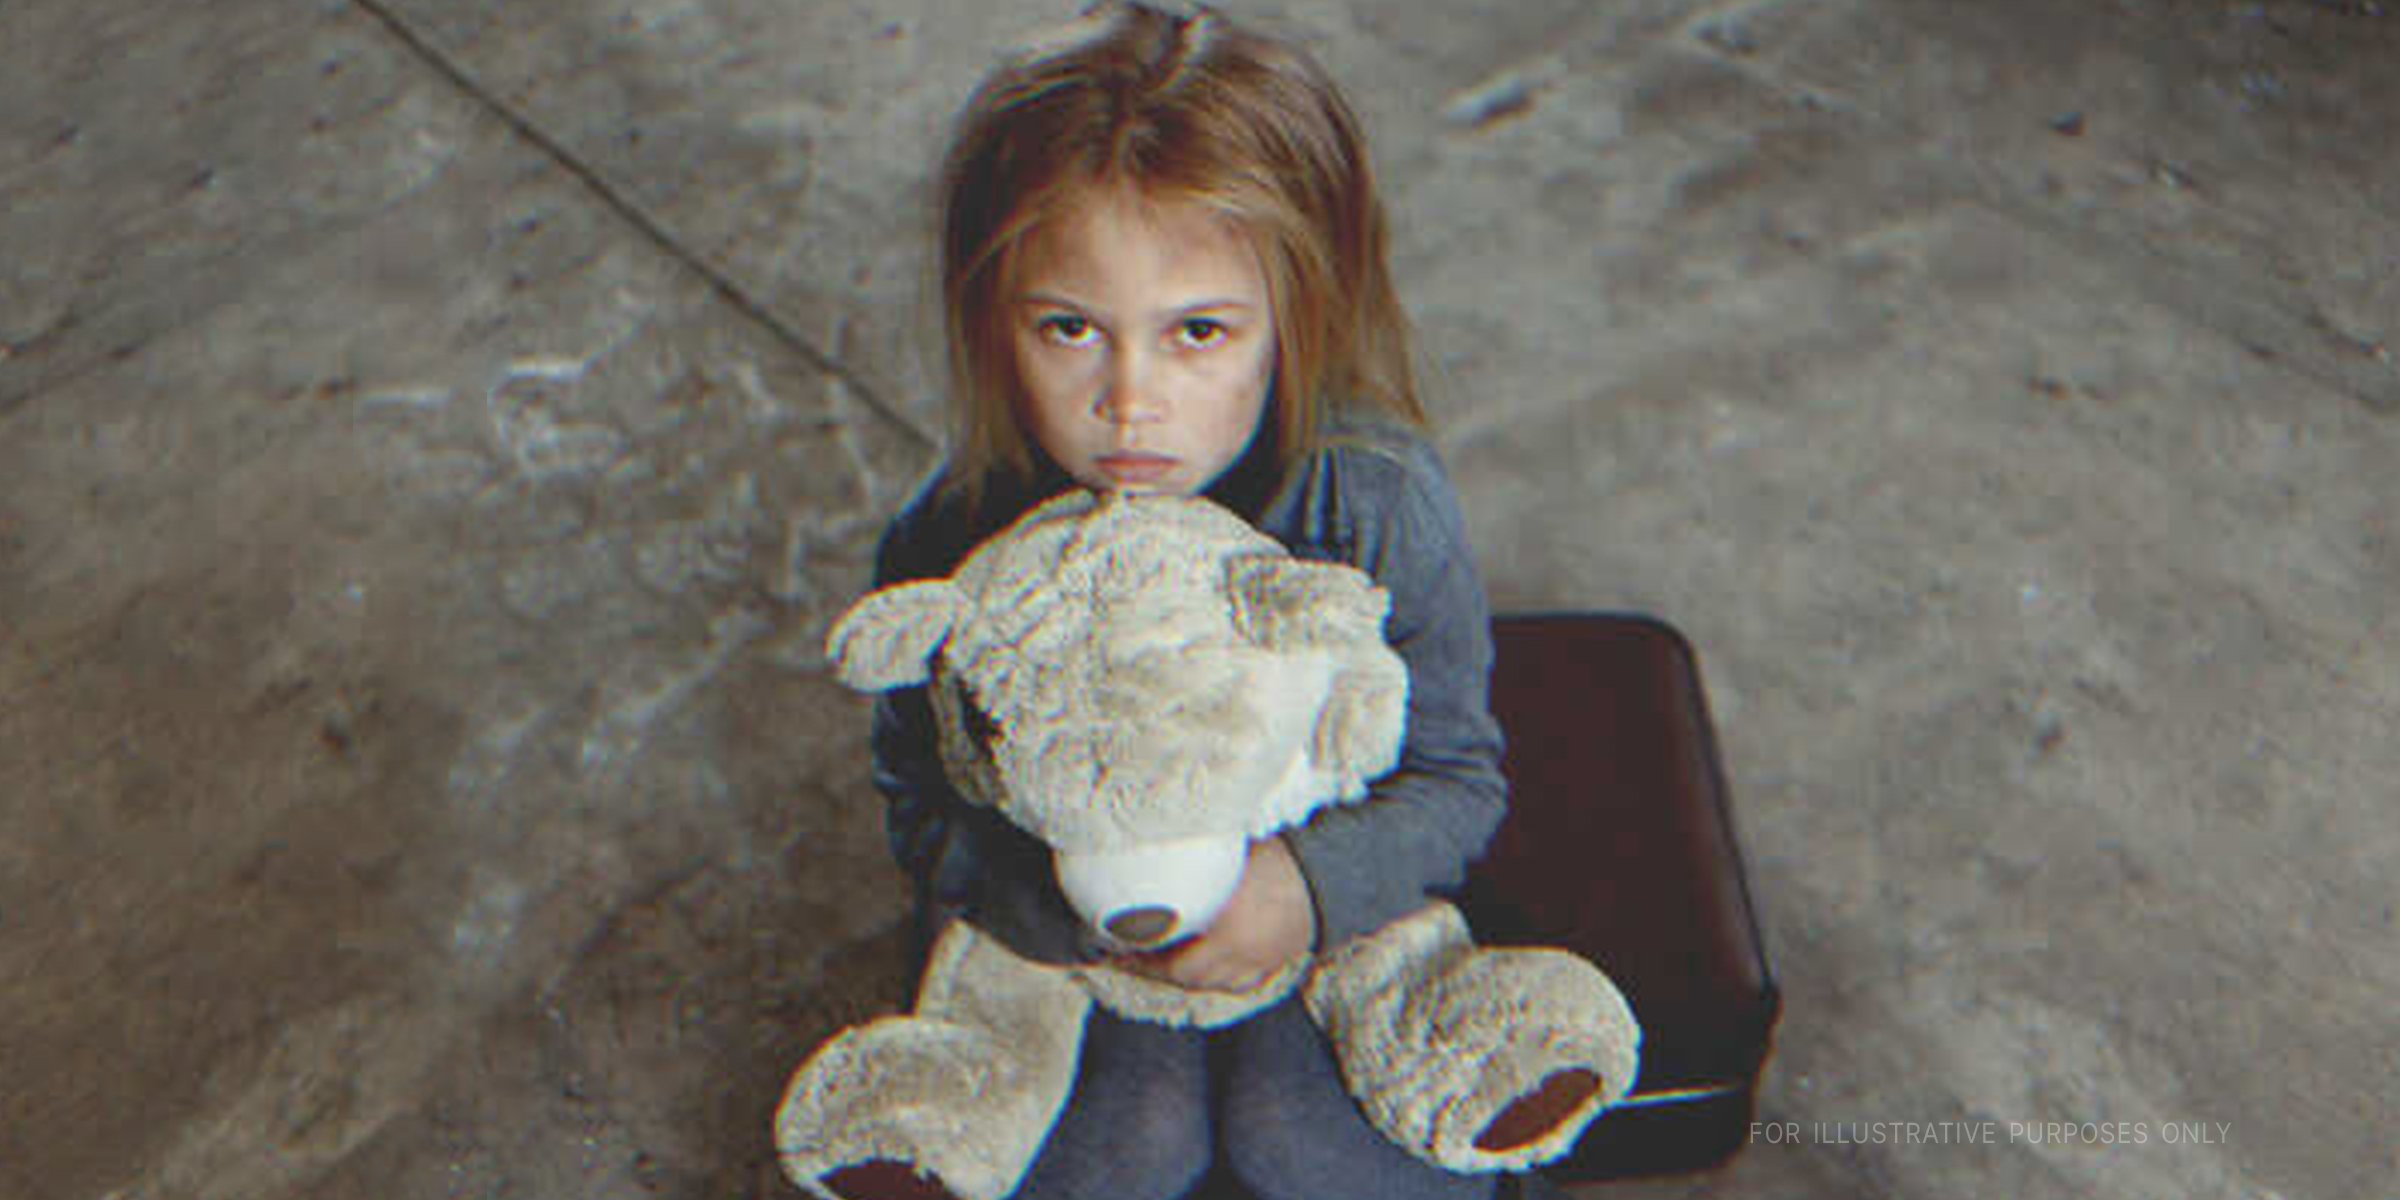 Girl hugs a teddy bear | Source: Shutterstock